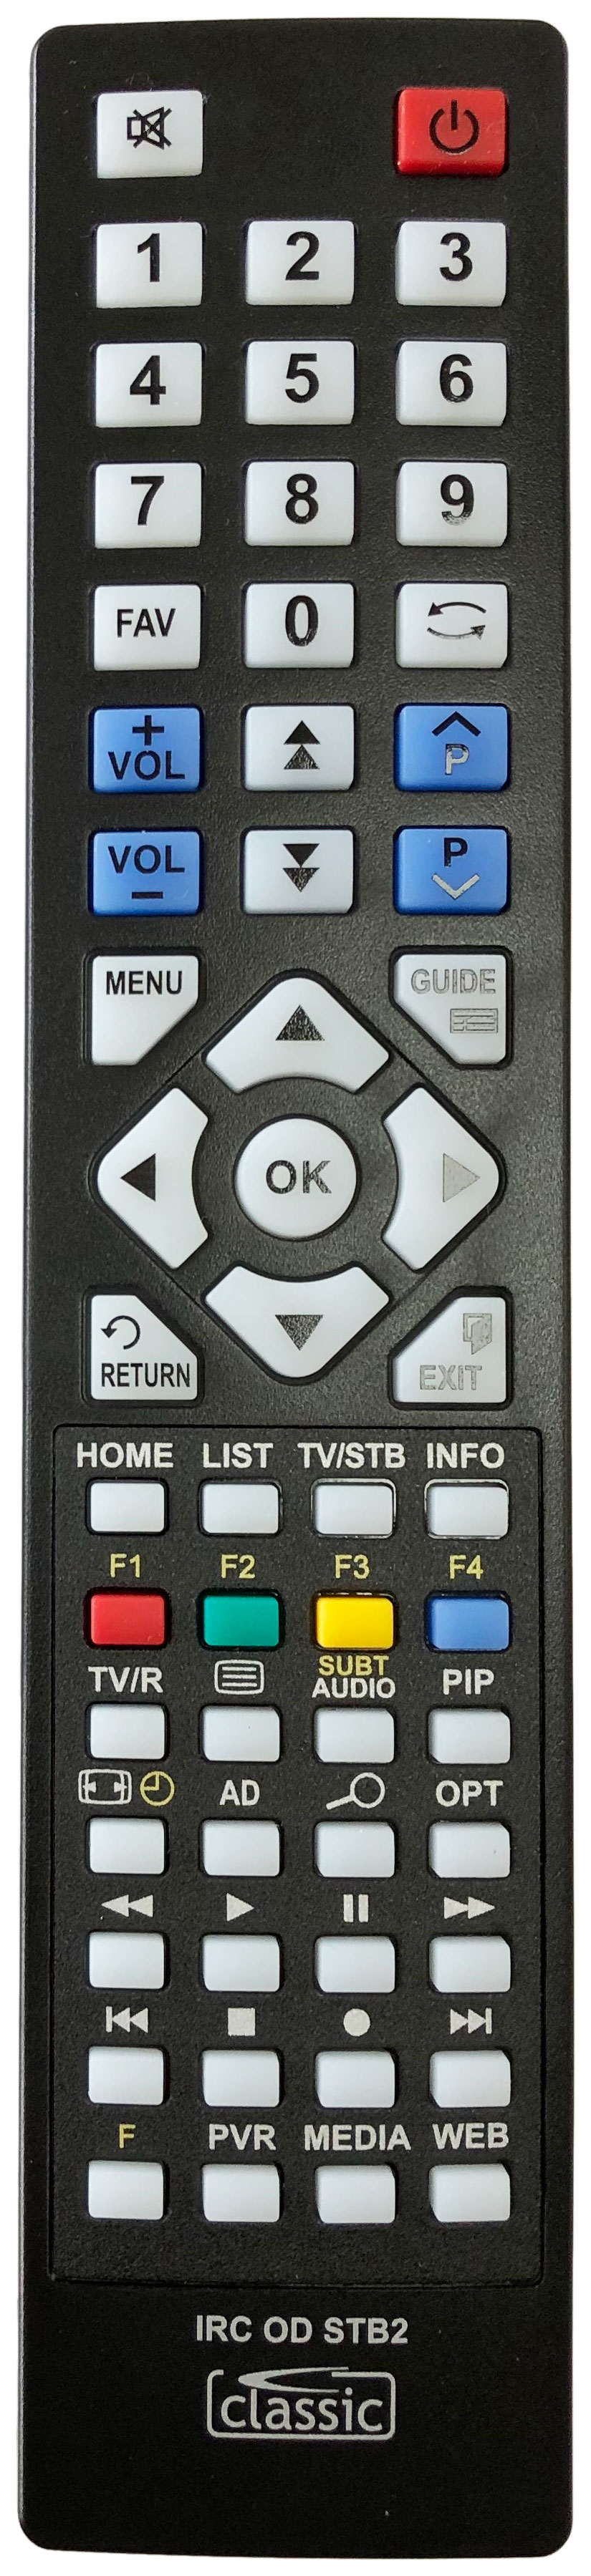 SAGEM DTR64160TECOUK Remote Control